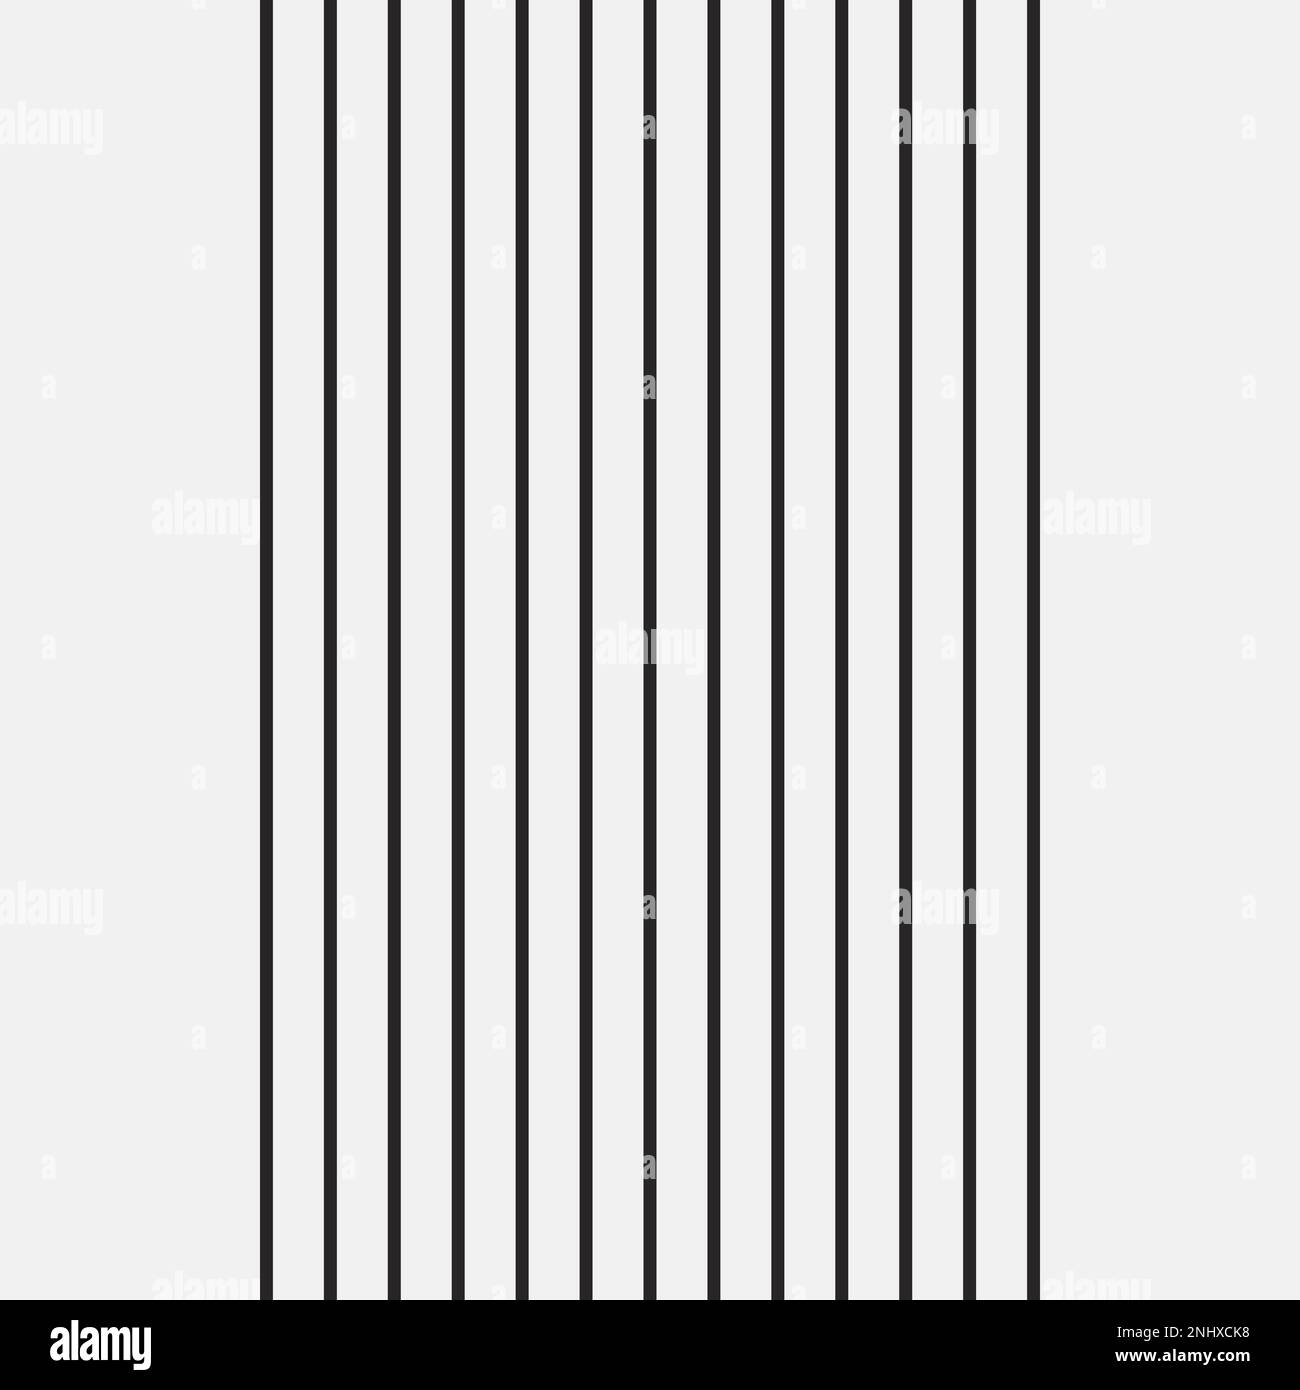 Linear Monochrome Geometric Texture. Vertical Stripes Pattern